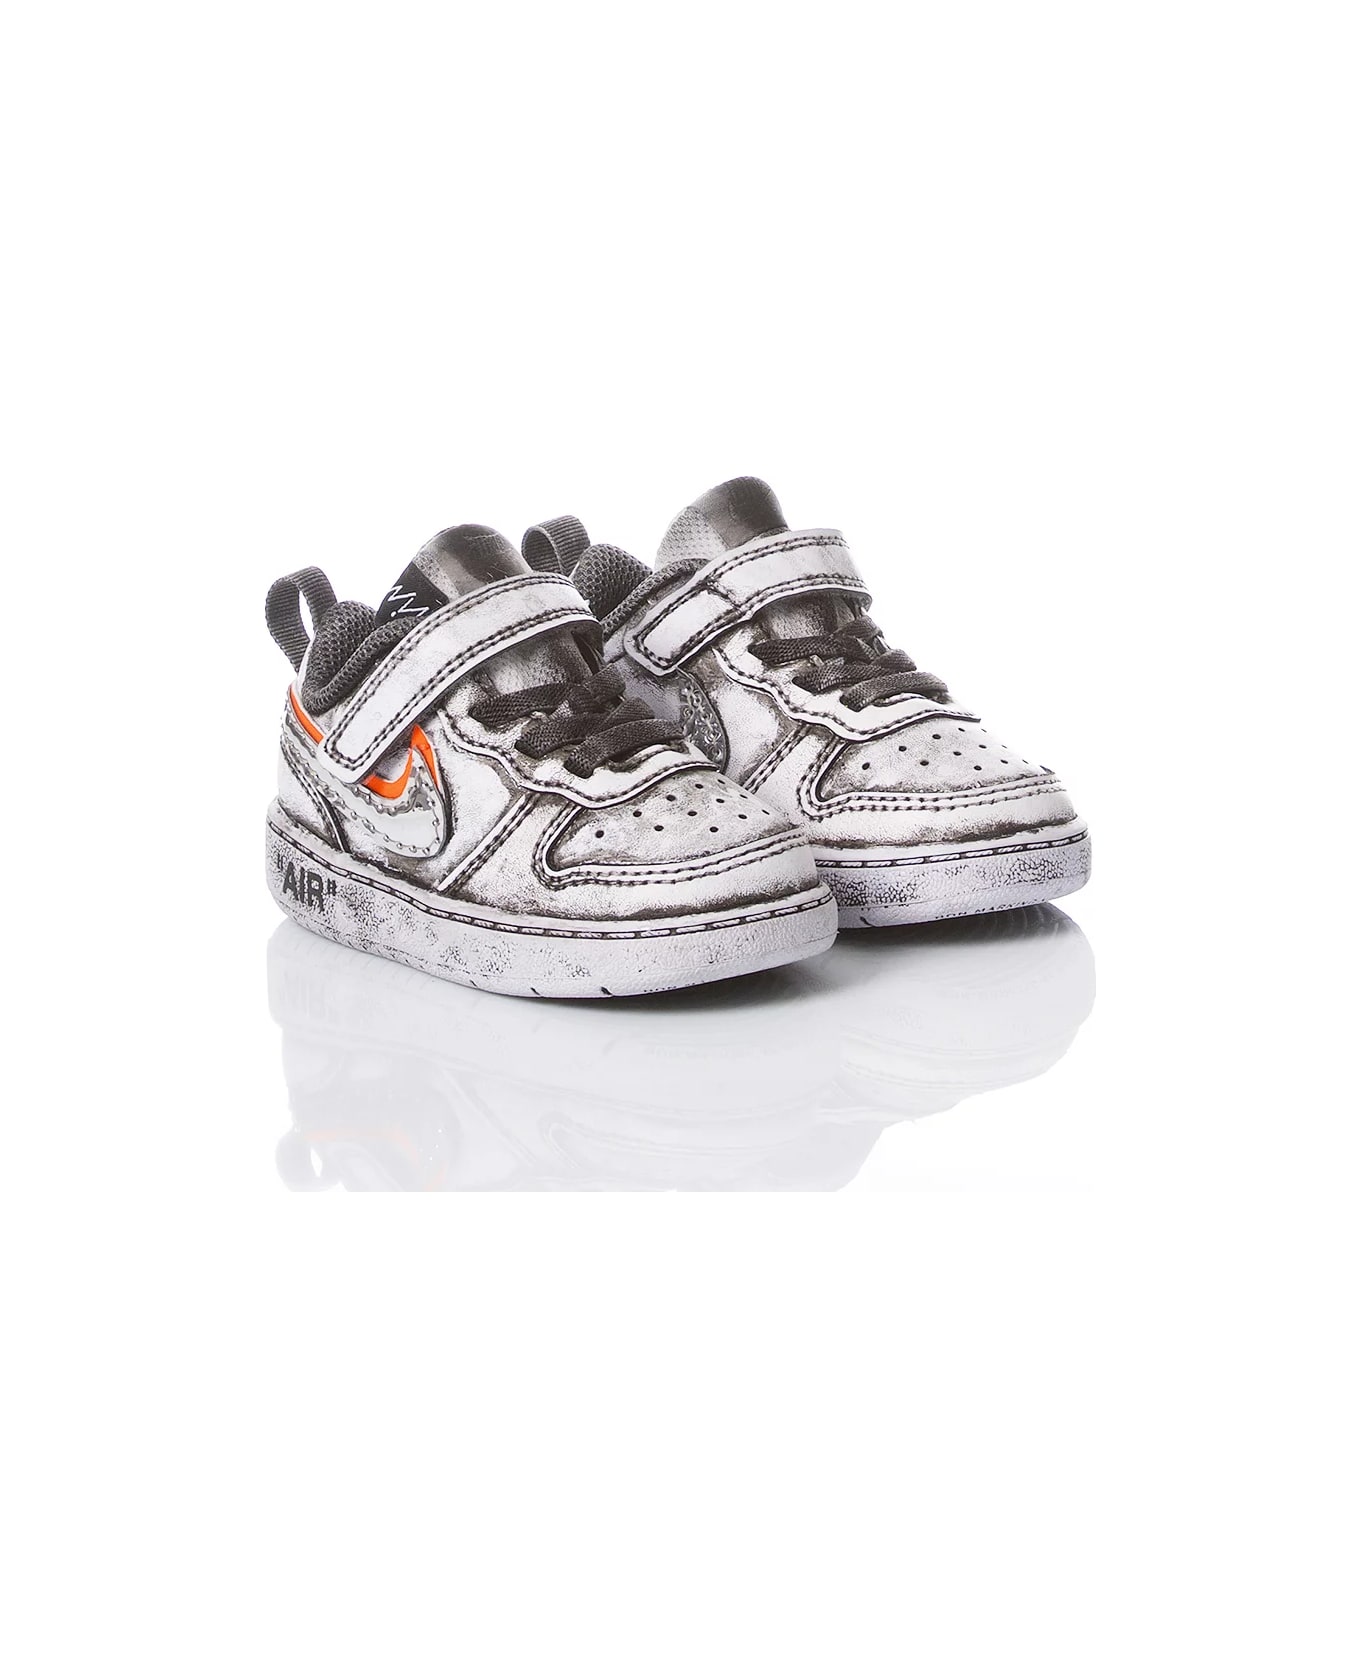 Mimanera Nike Baby: Customize Your Little Shoe! シューズ